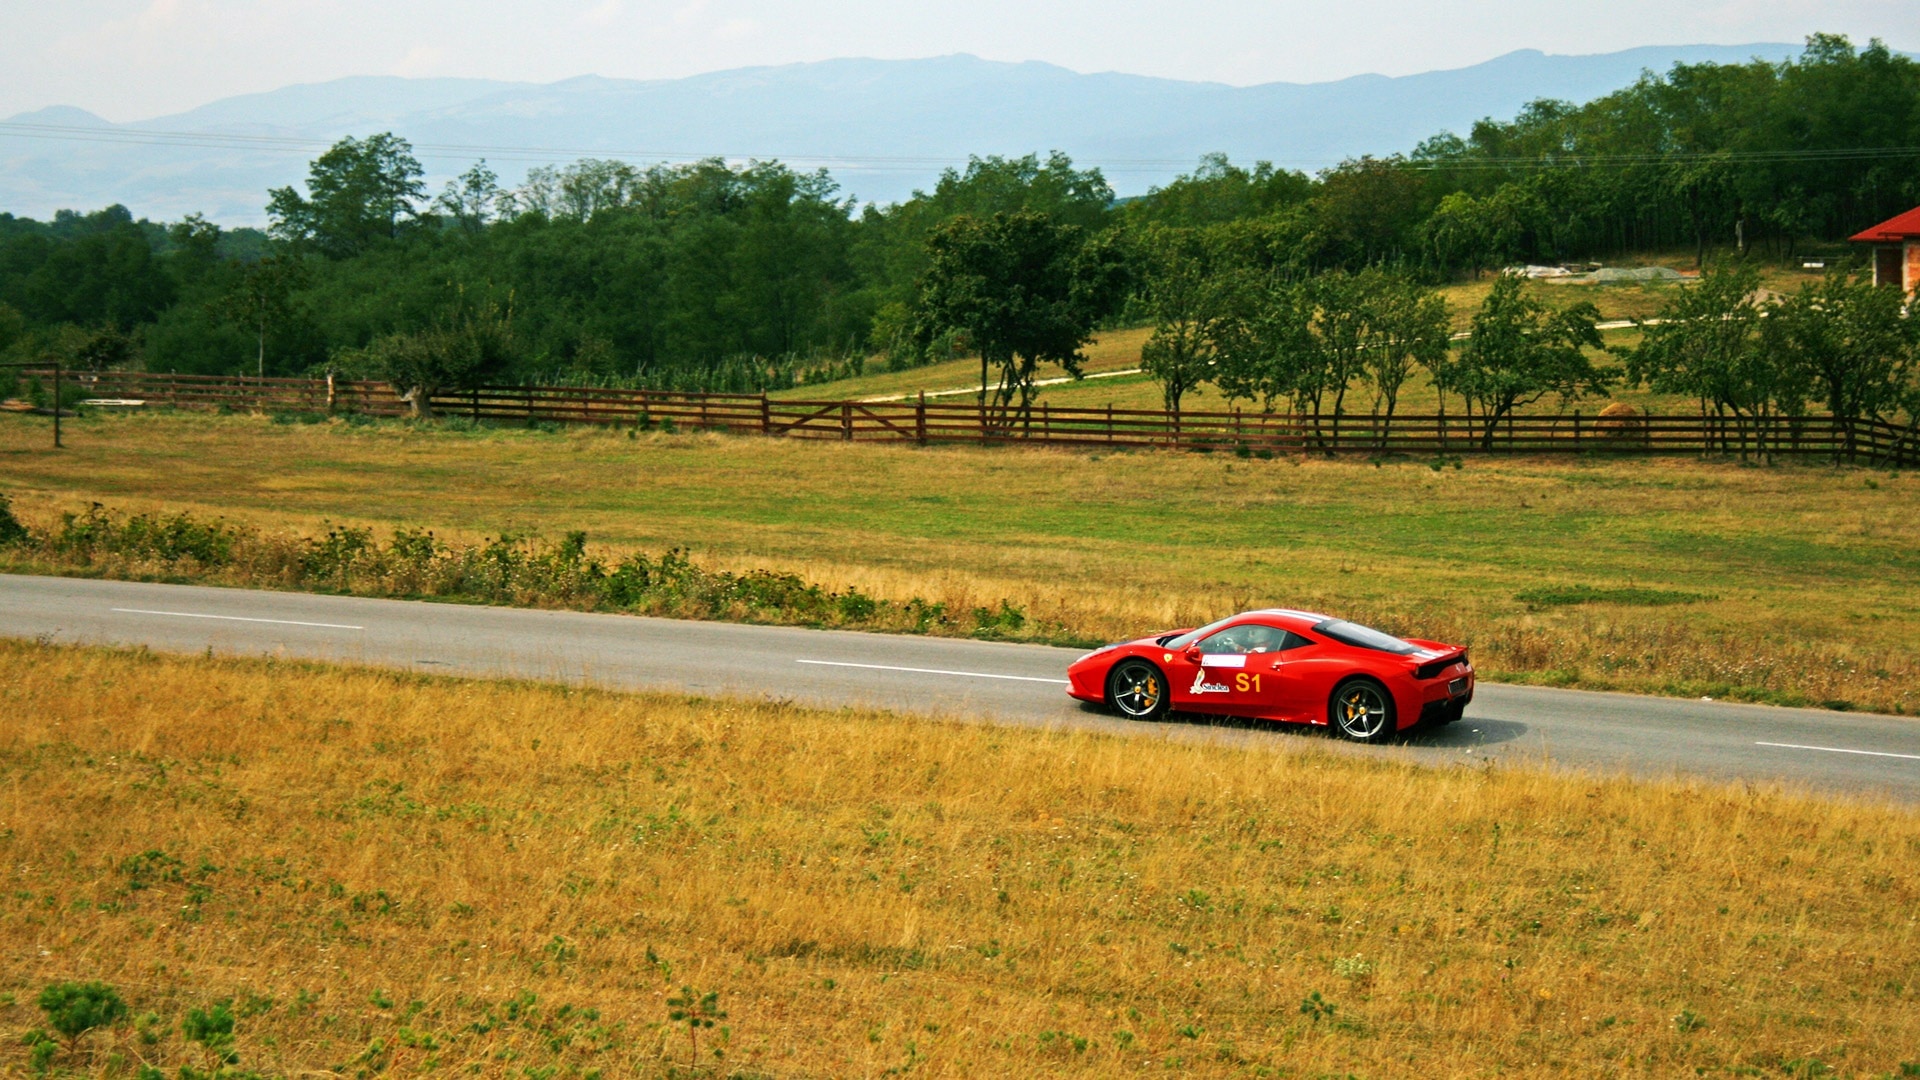 Landscape, Ferrari, Racing, Car, Race, car, field